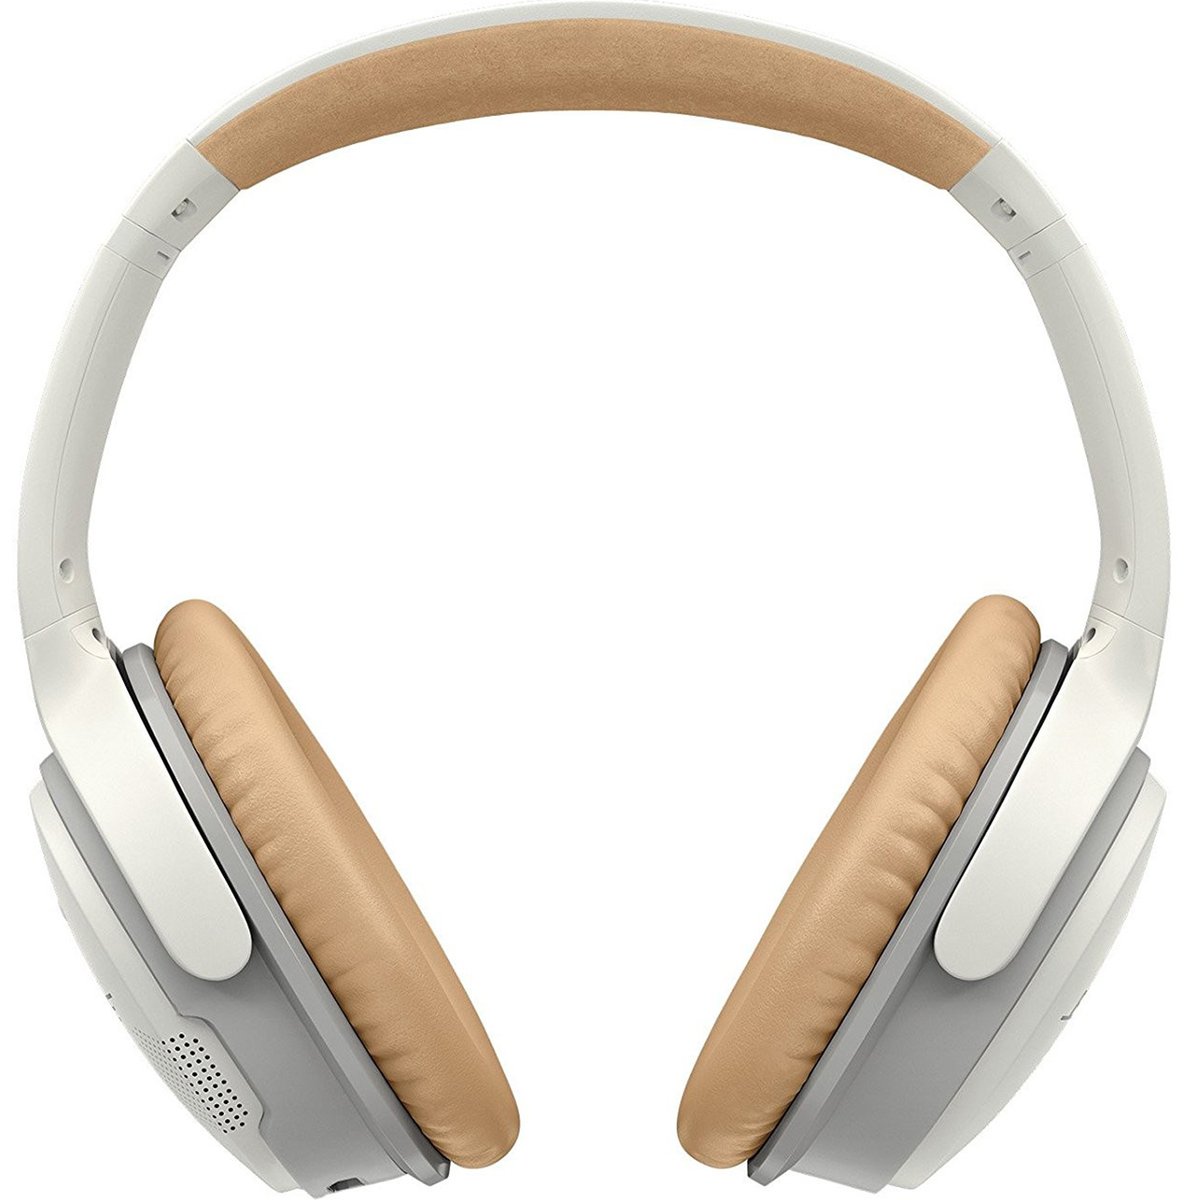 Bose Around Ear Wireless Headphones SoundLink II White